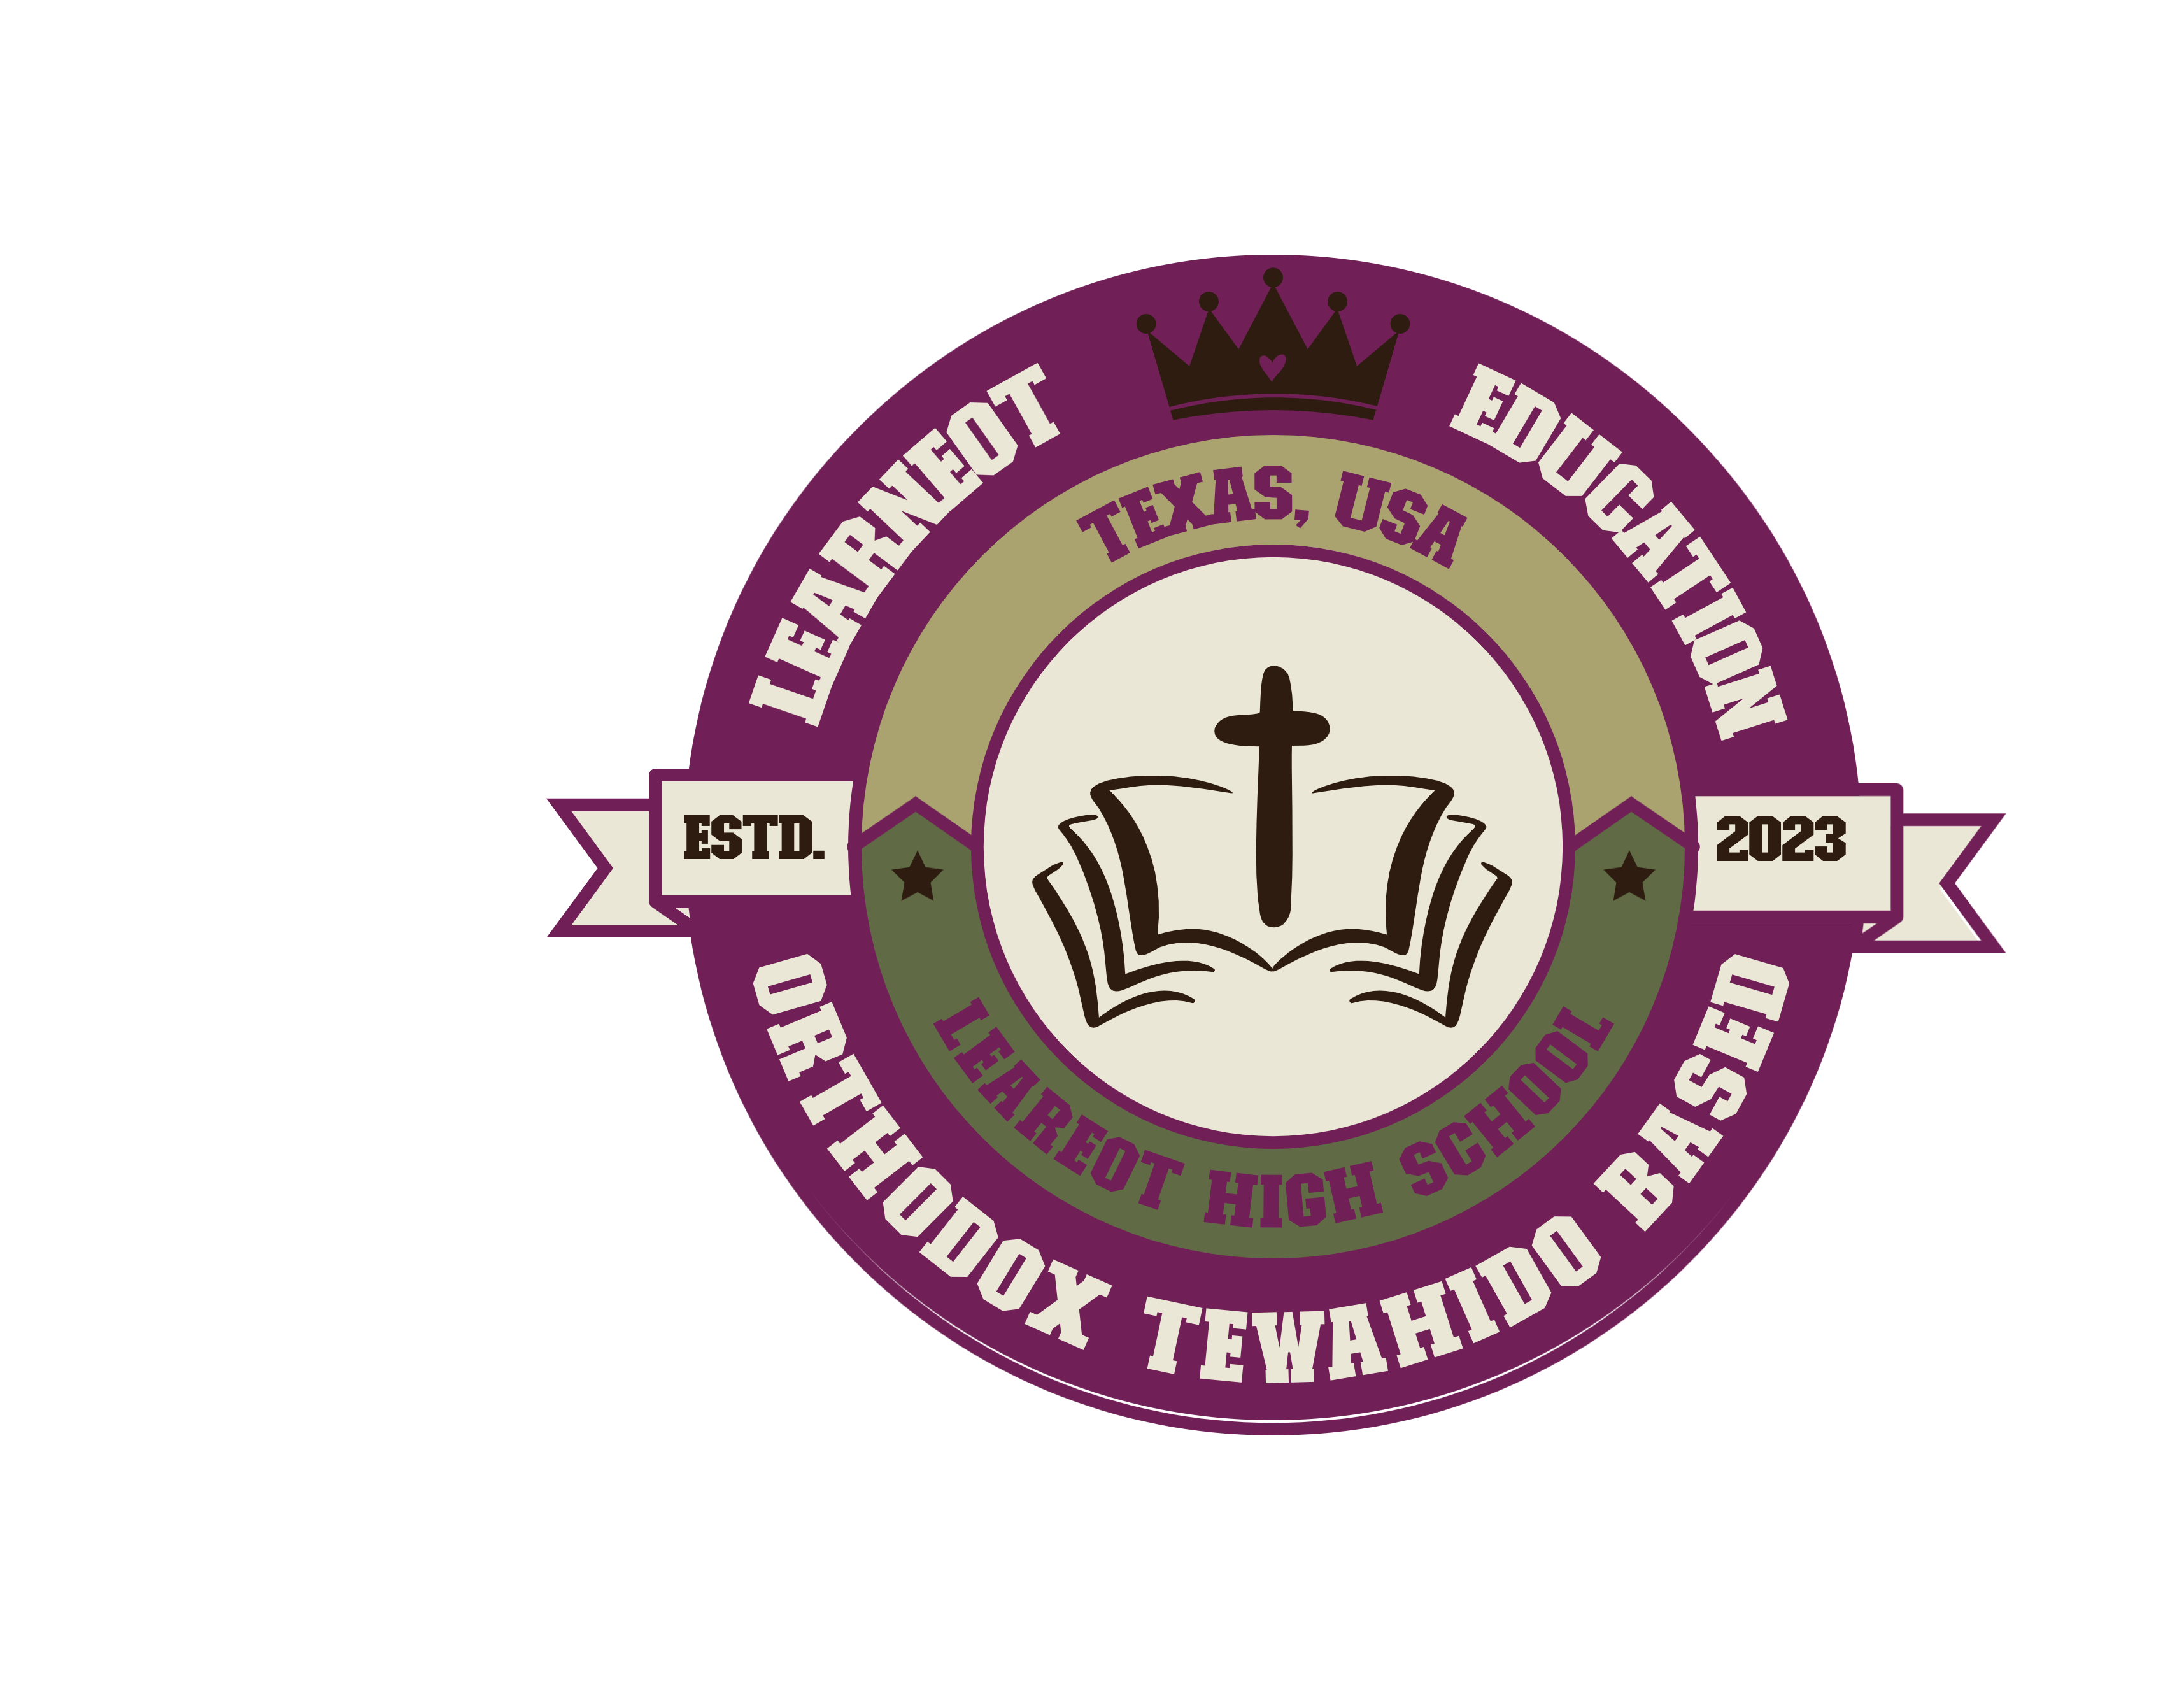 LEARNEOT EISD "Ethiopian Orthodox Tewahedo based school in Dallas, Tx"